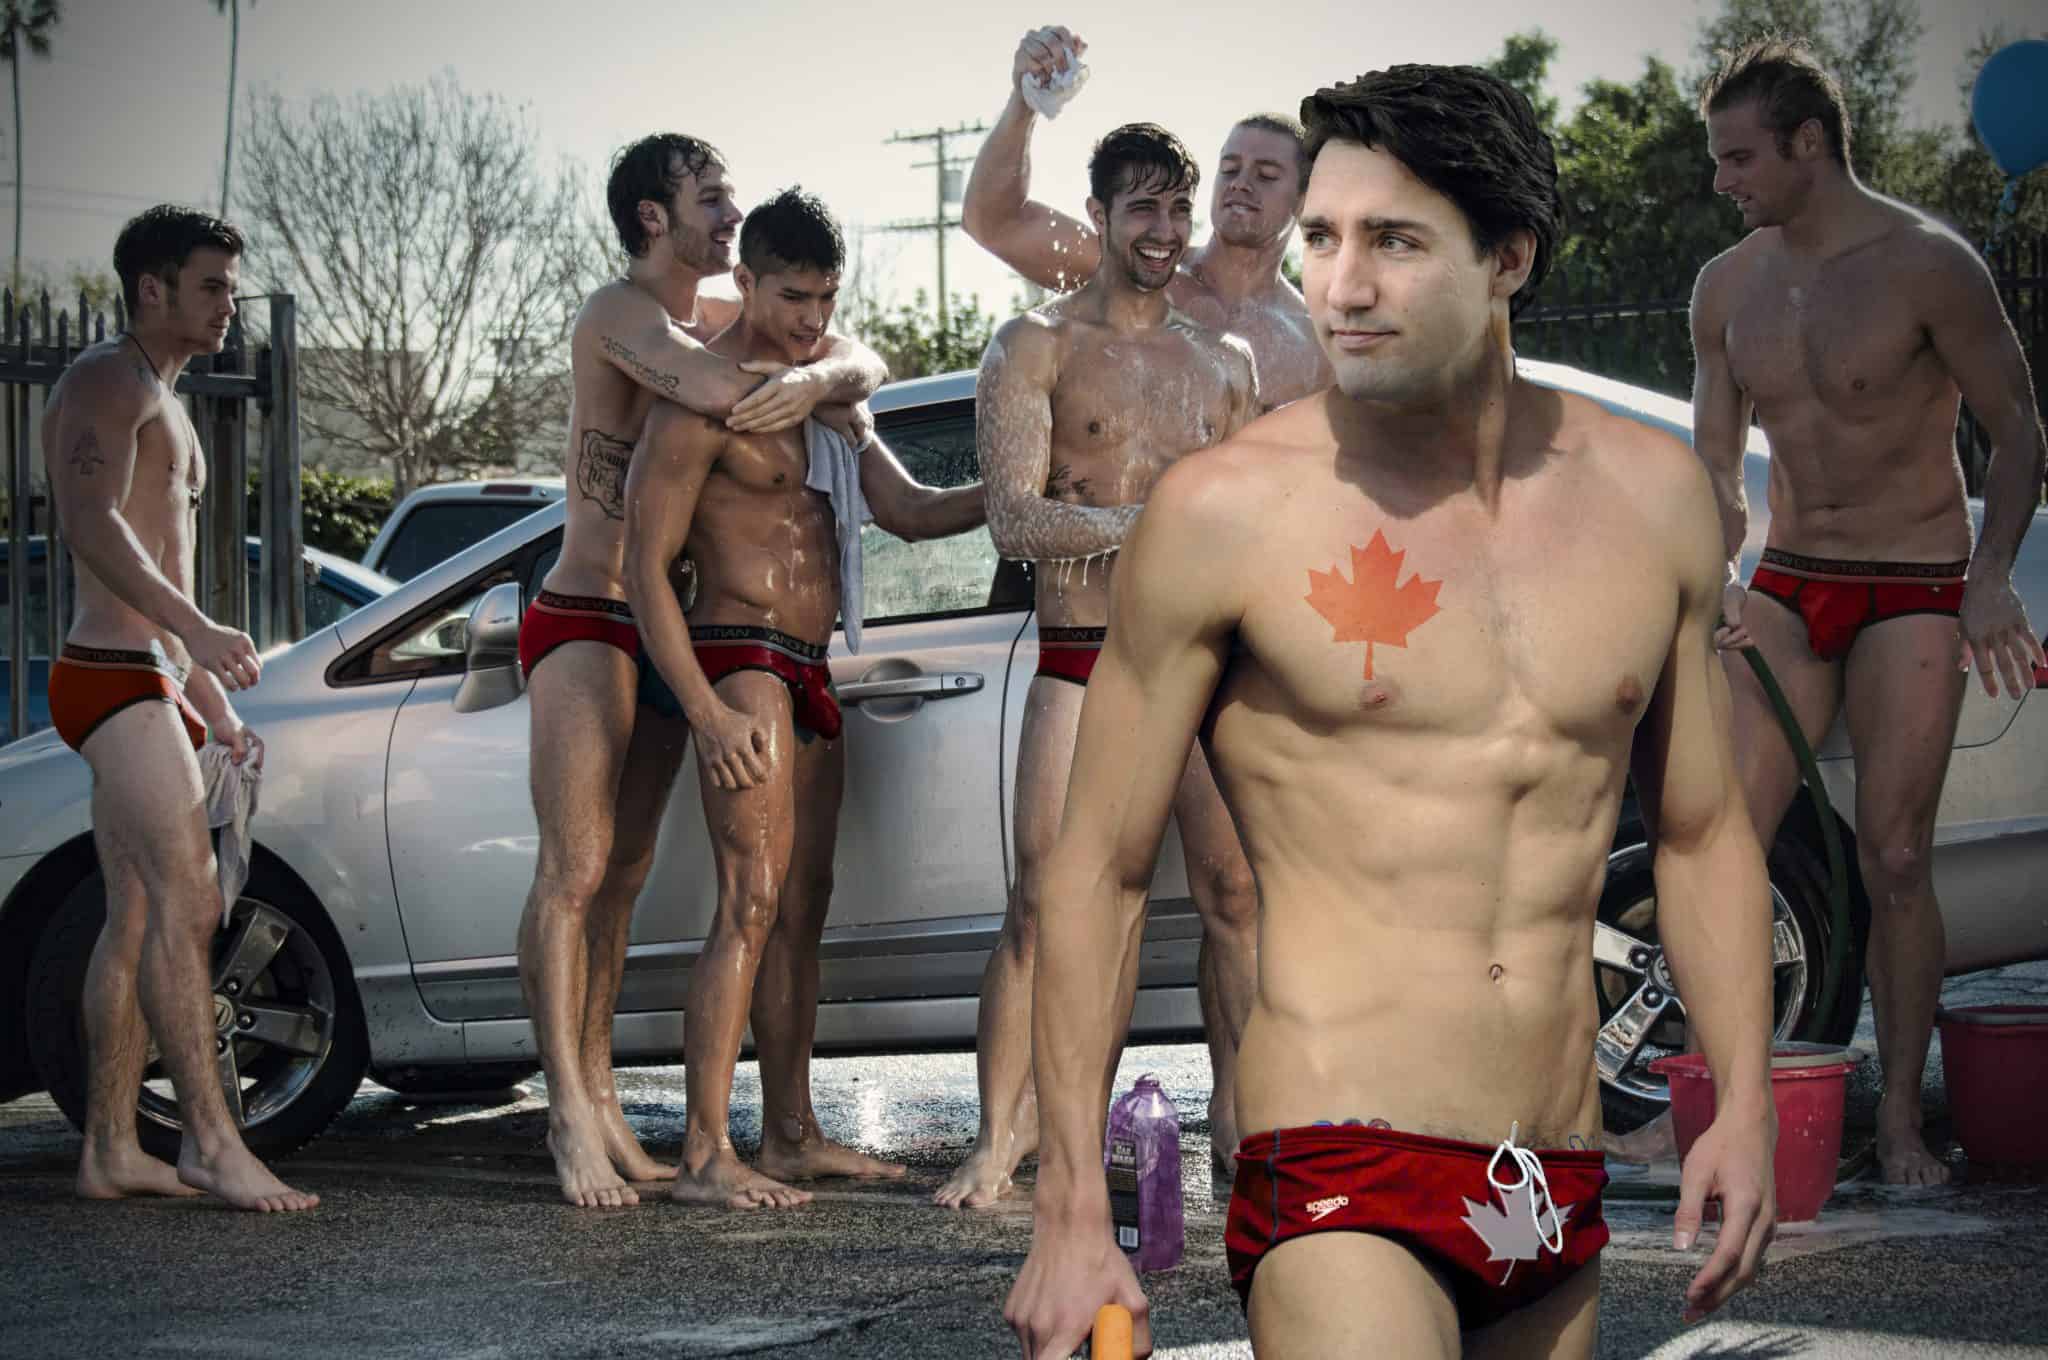 Canadian PM Justin Trudeau Organizes Sexy Car Wash To Address Budget Shortfalls